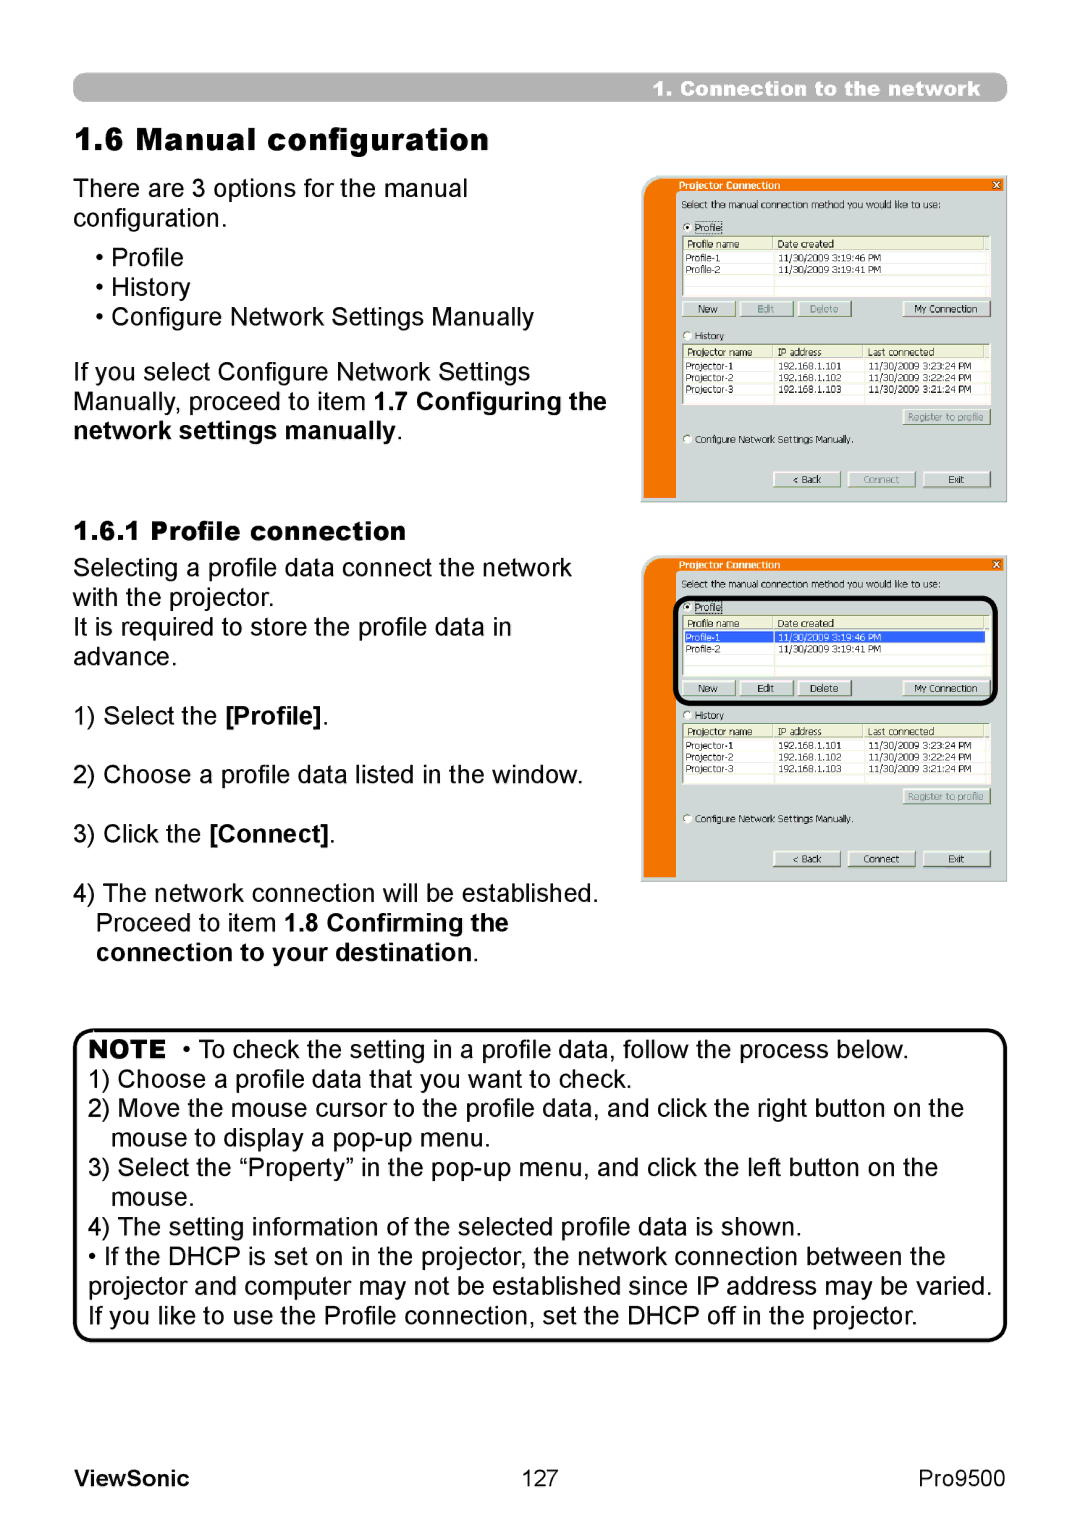 ViewSonic VS13835 warranty Manual configuration, Profile connection, 127 